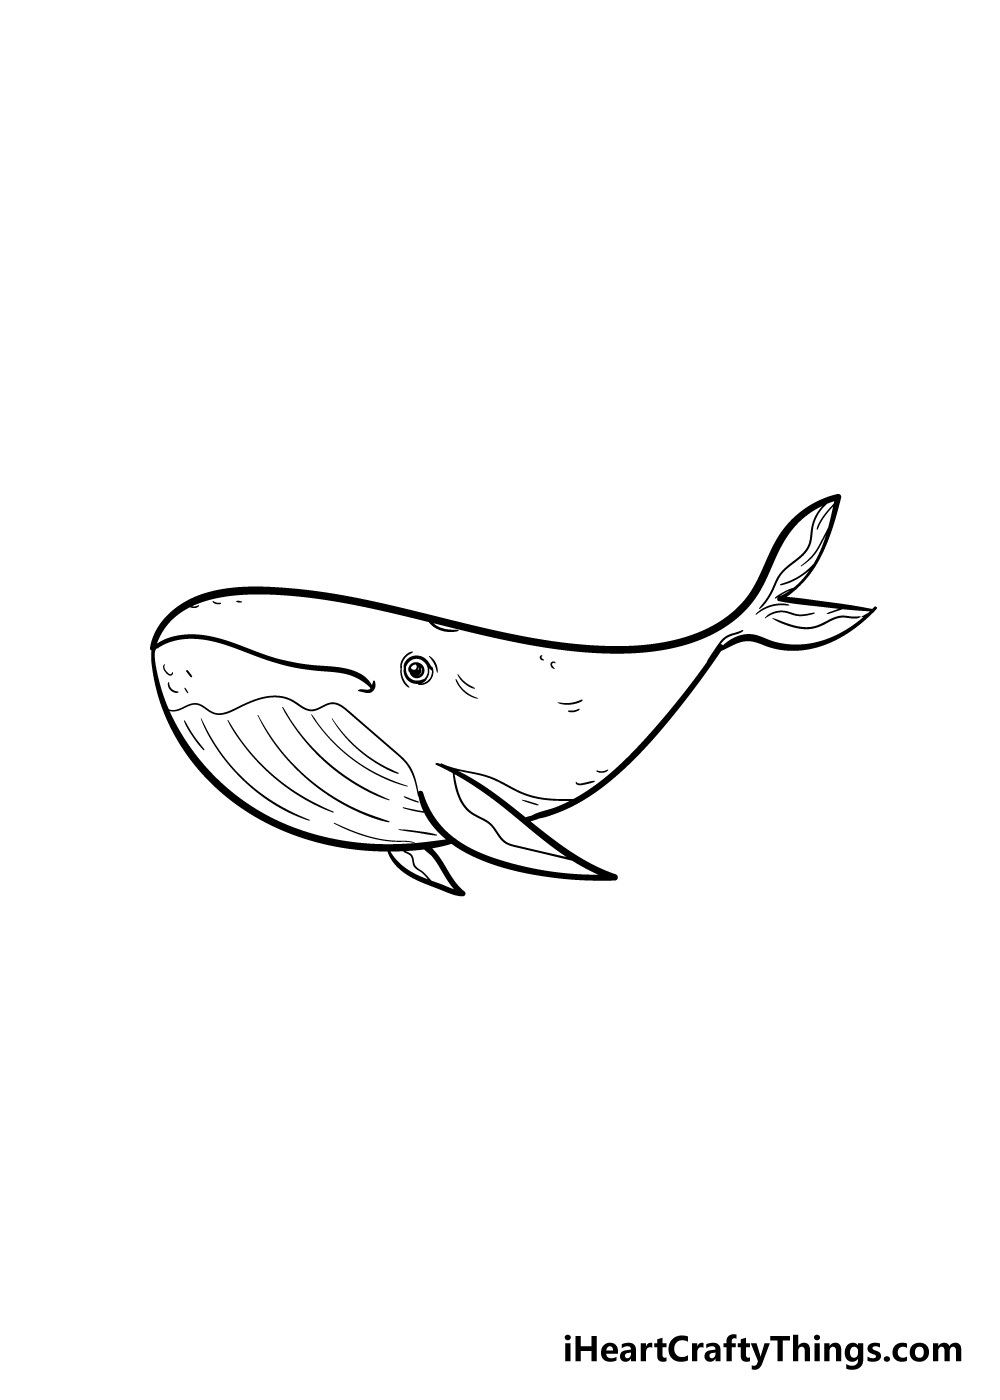 vẽ cá voi bước 6